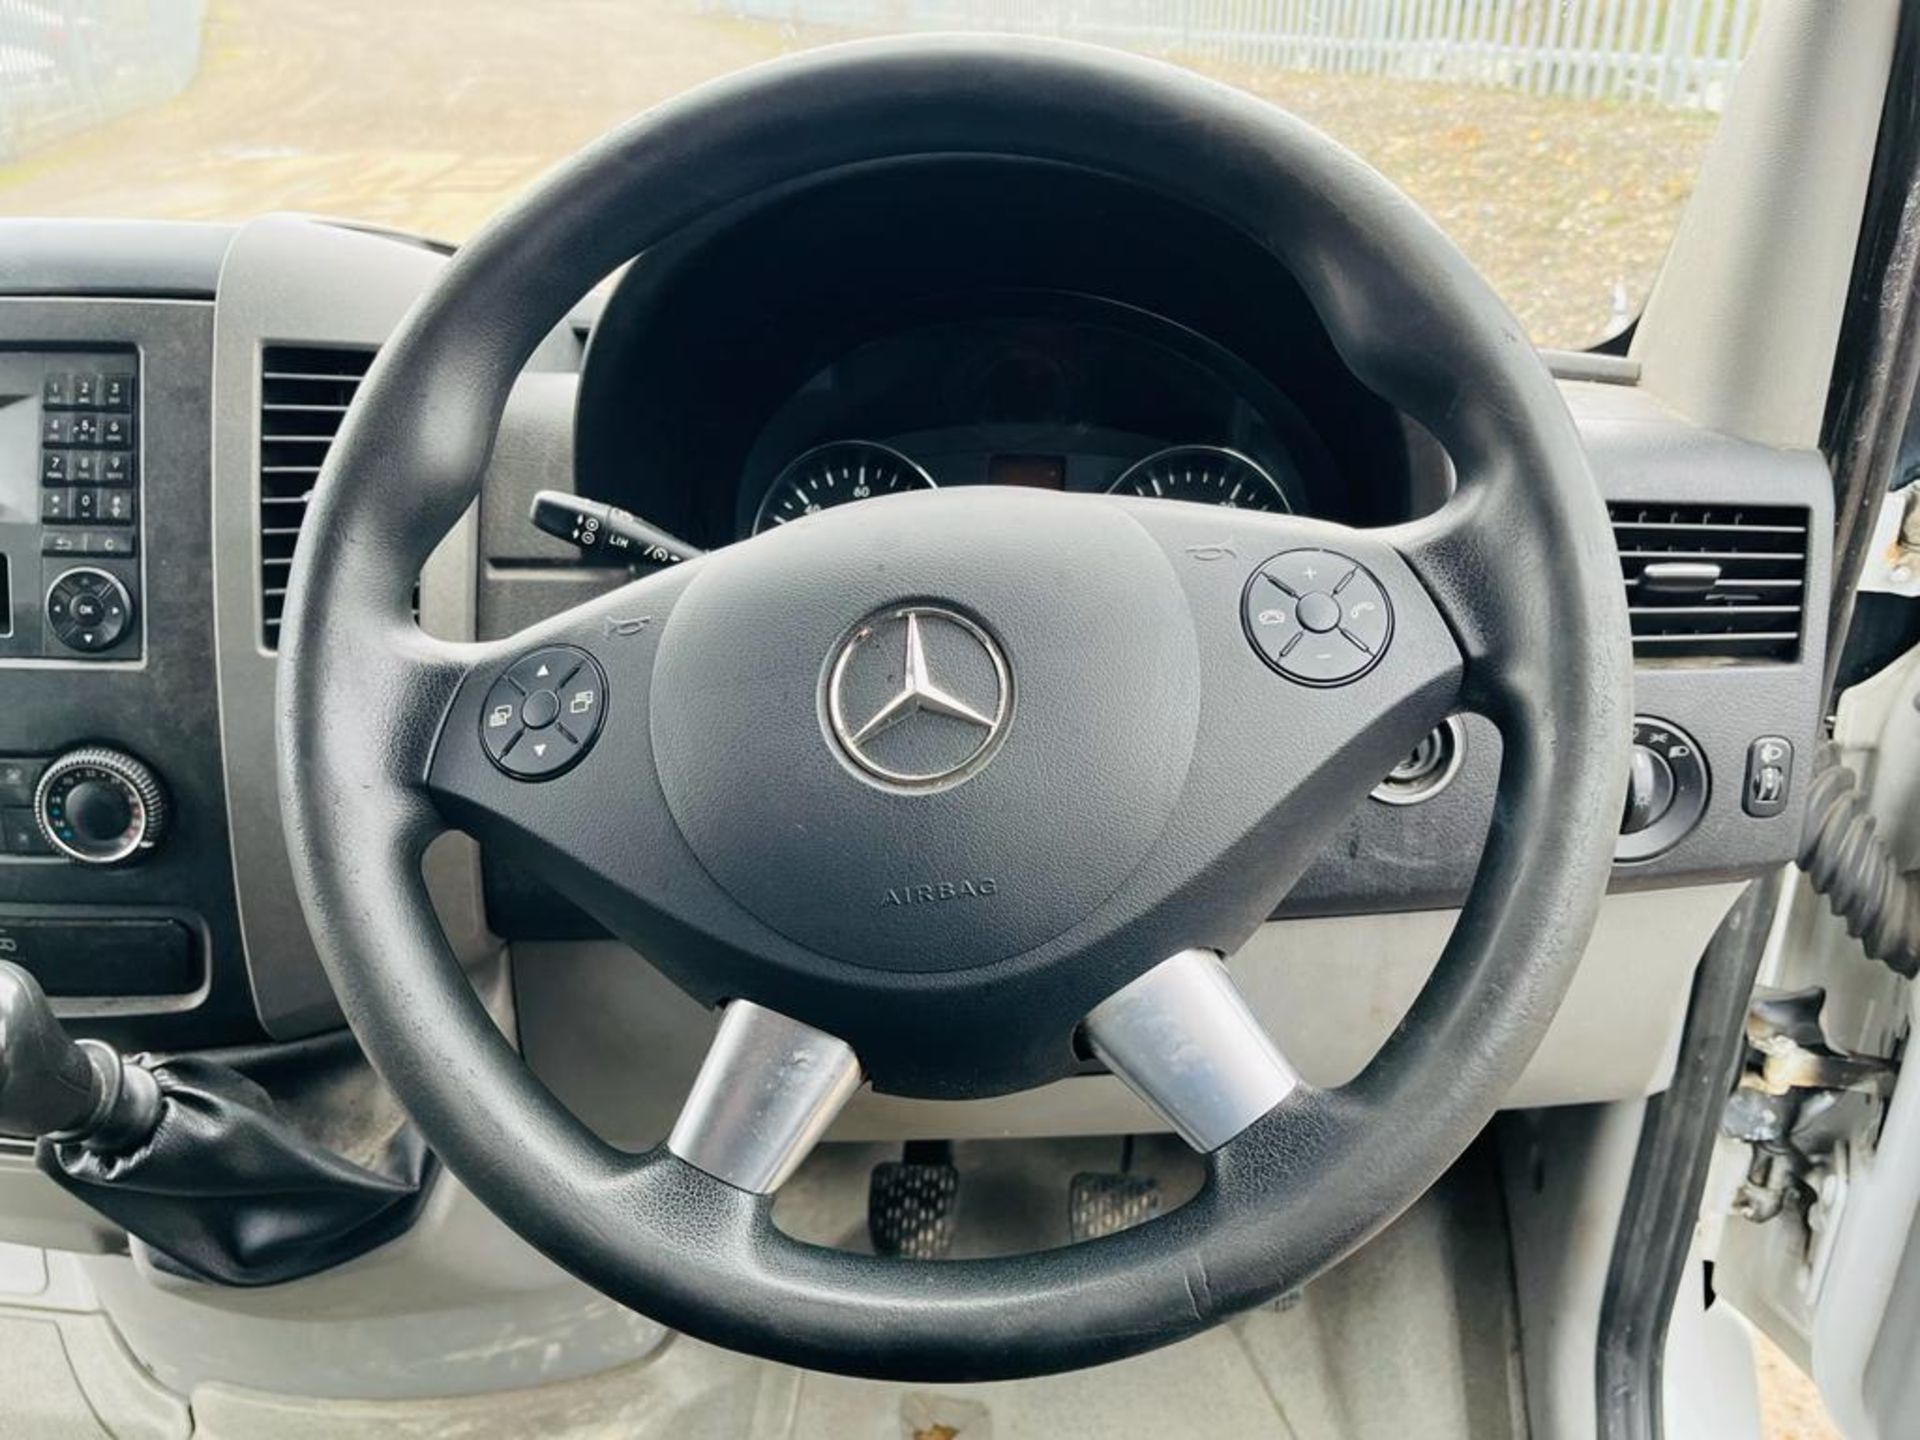 Mercedes-Benz Sprinter 313 2.1 CDI 3.5T LWB H/R 2014 '64 Reg' - Parking Sensors - Bluetooth Media - Image 25 of 27